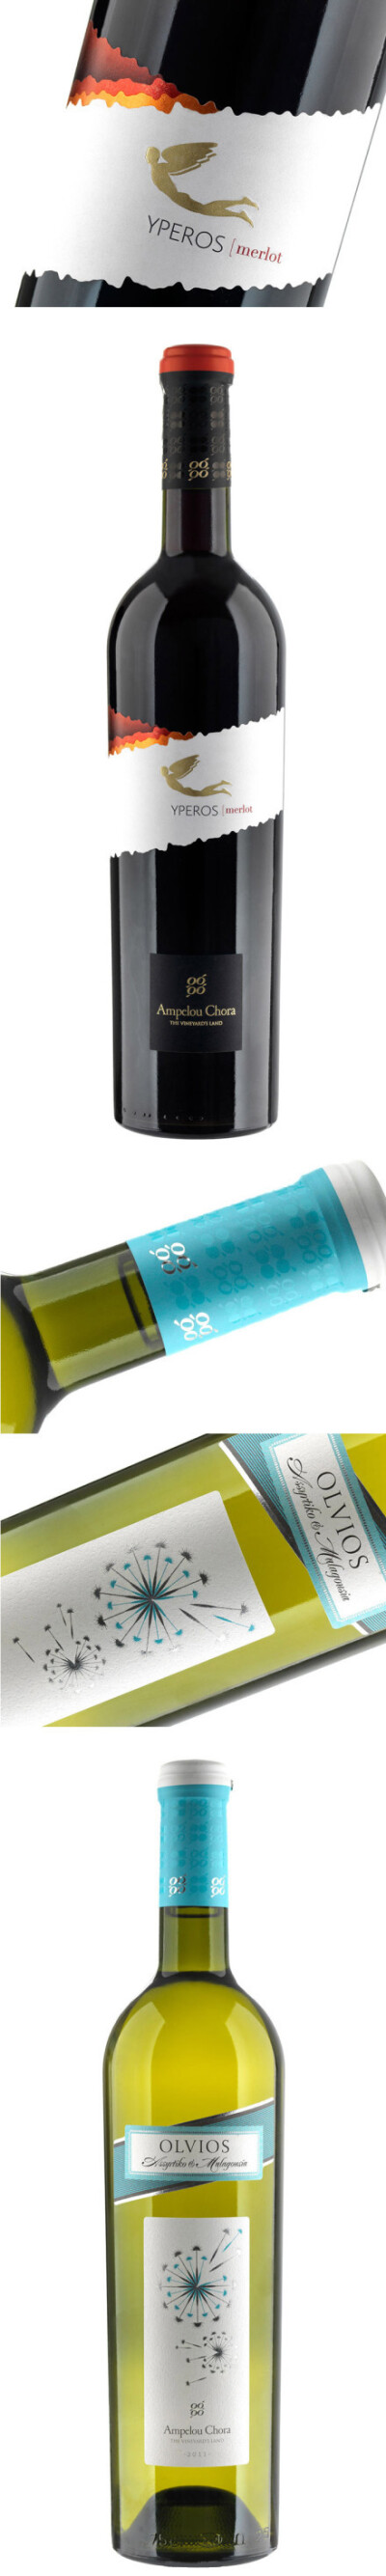 Olvios & Yperos Wine葡萄酒包装欣赏。